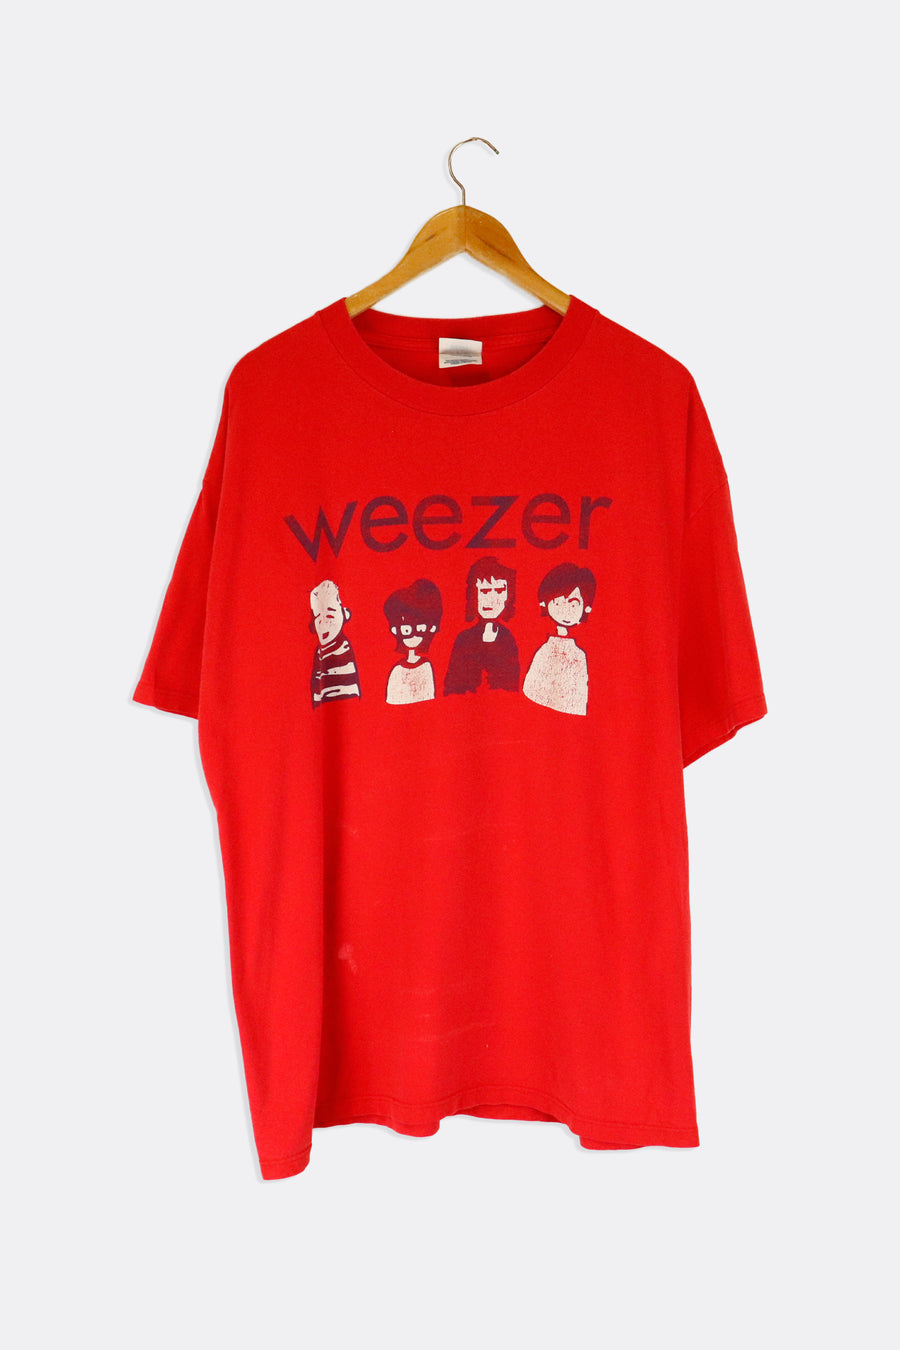 Vintage Weezer Music Graphic T Shirt Sz XL